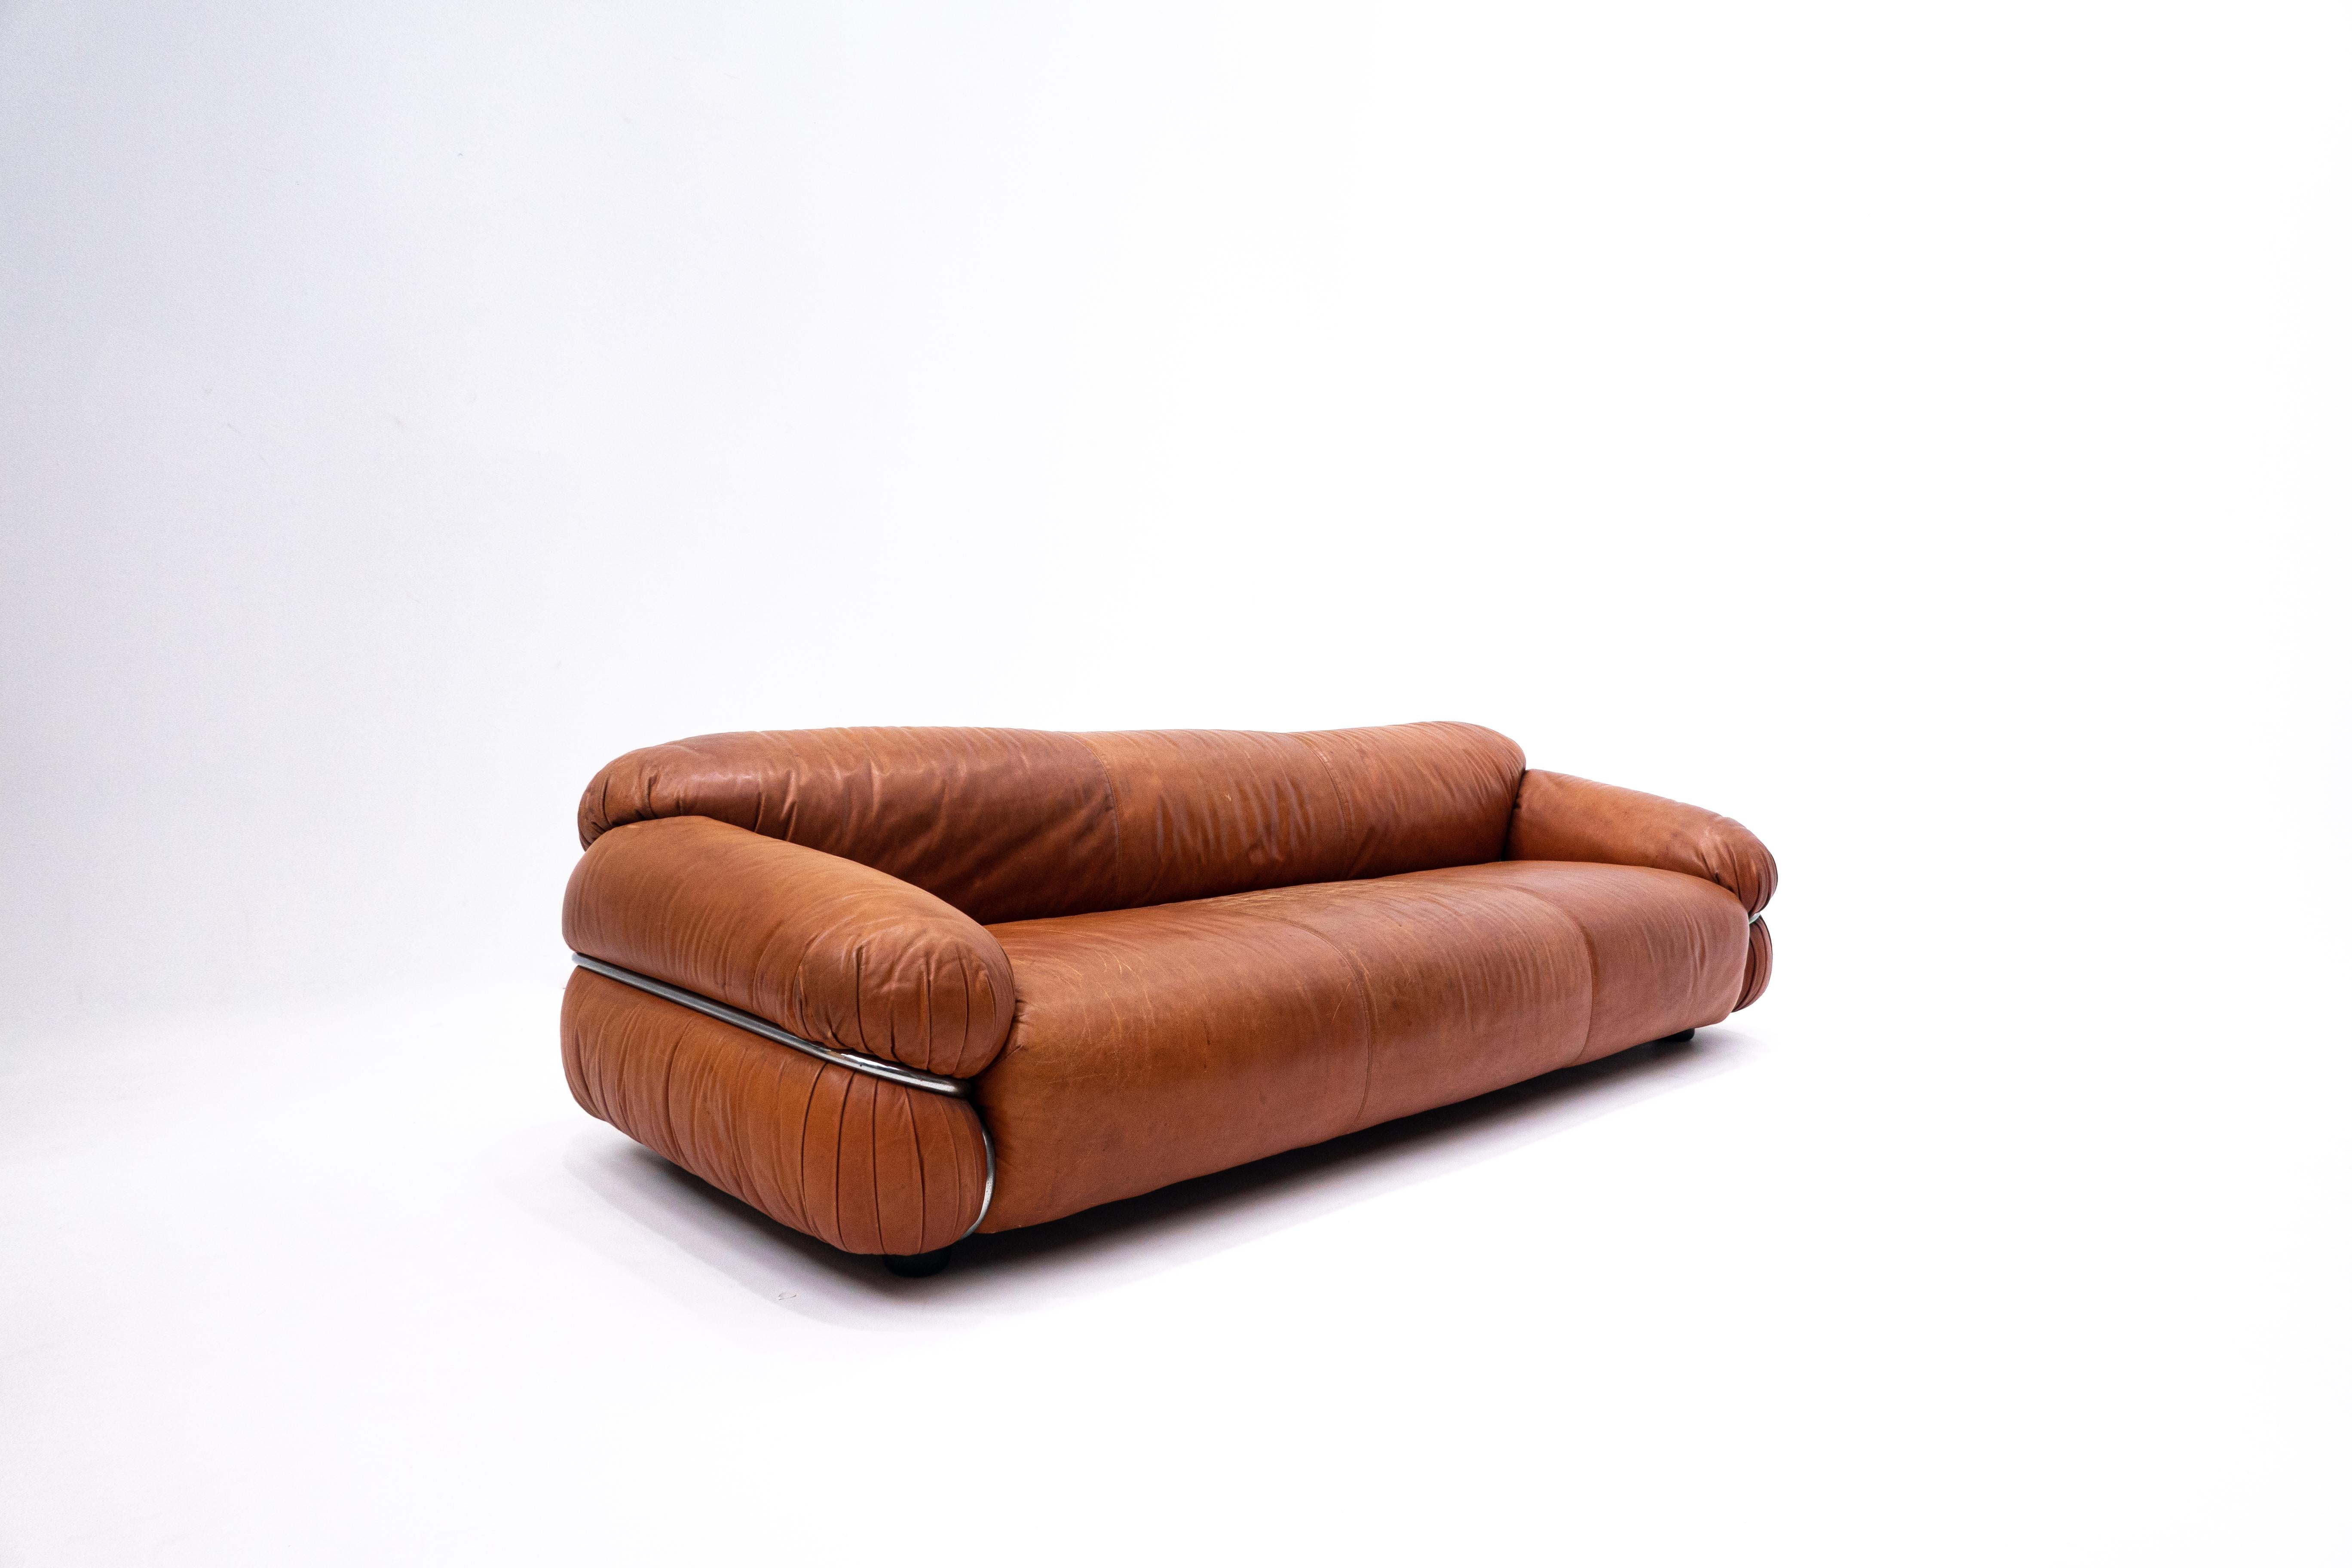 Sesann sofa by Gianfranco Frattini for Cassina, cognac leather, Italy, 1970s
Original leather.